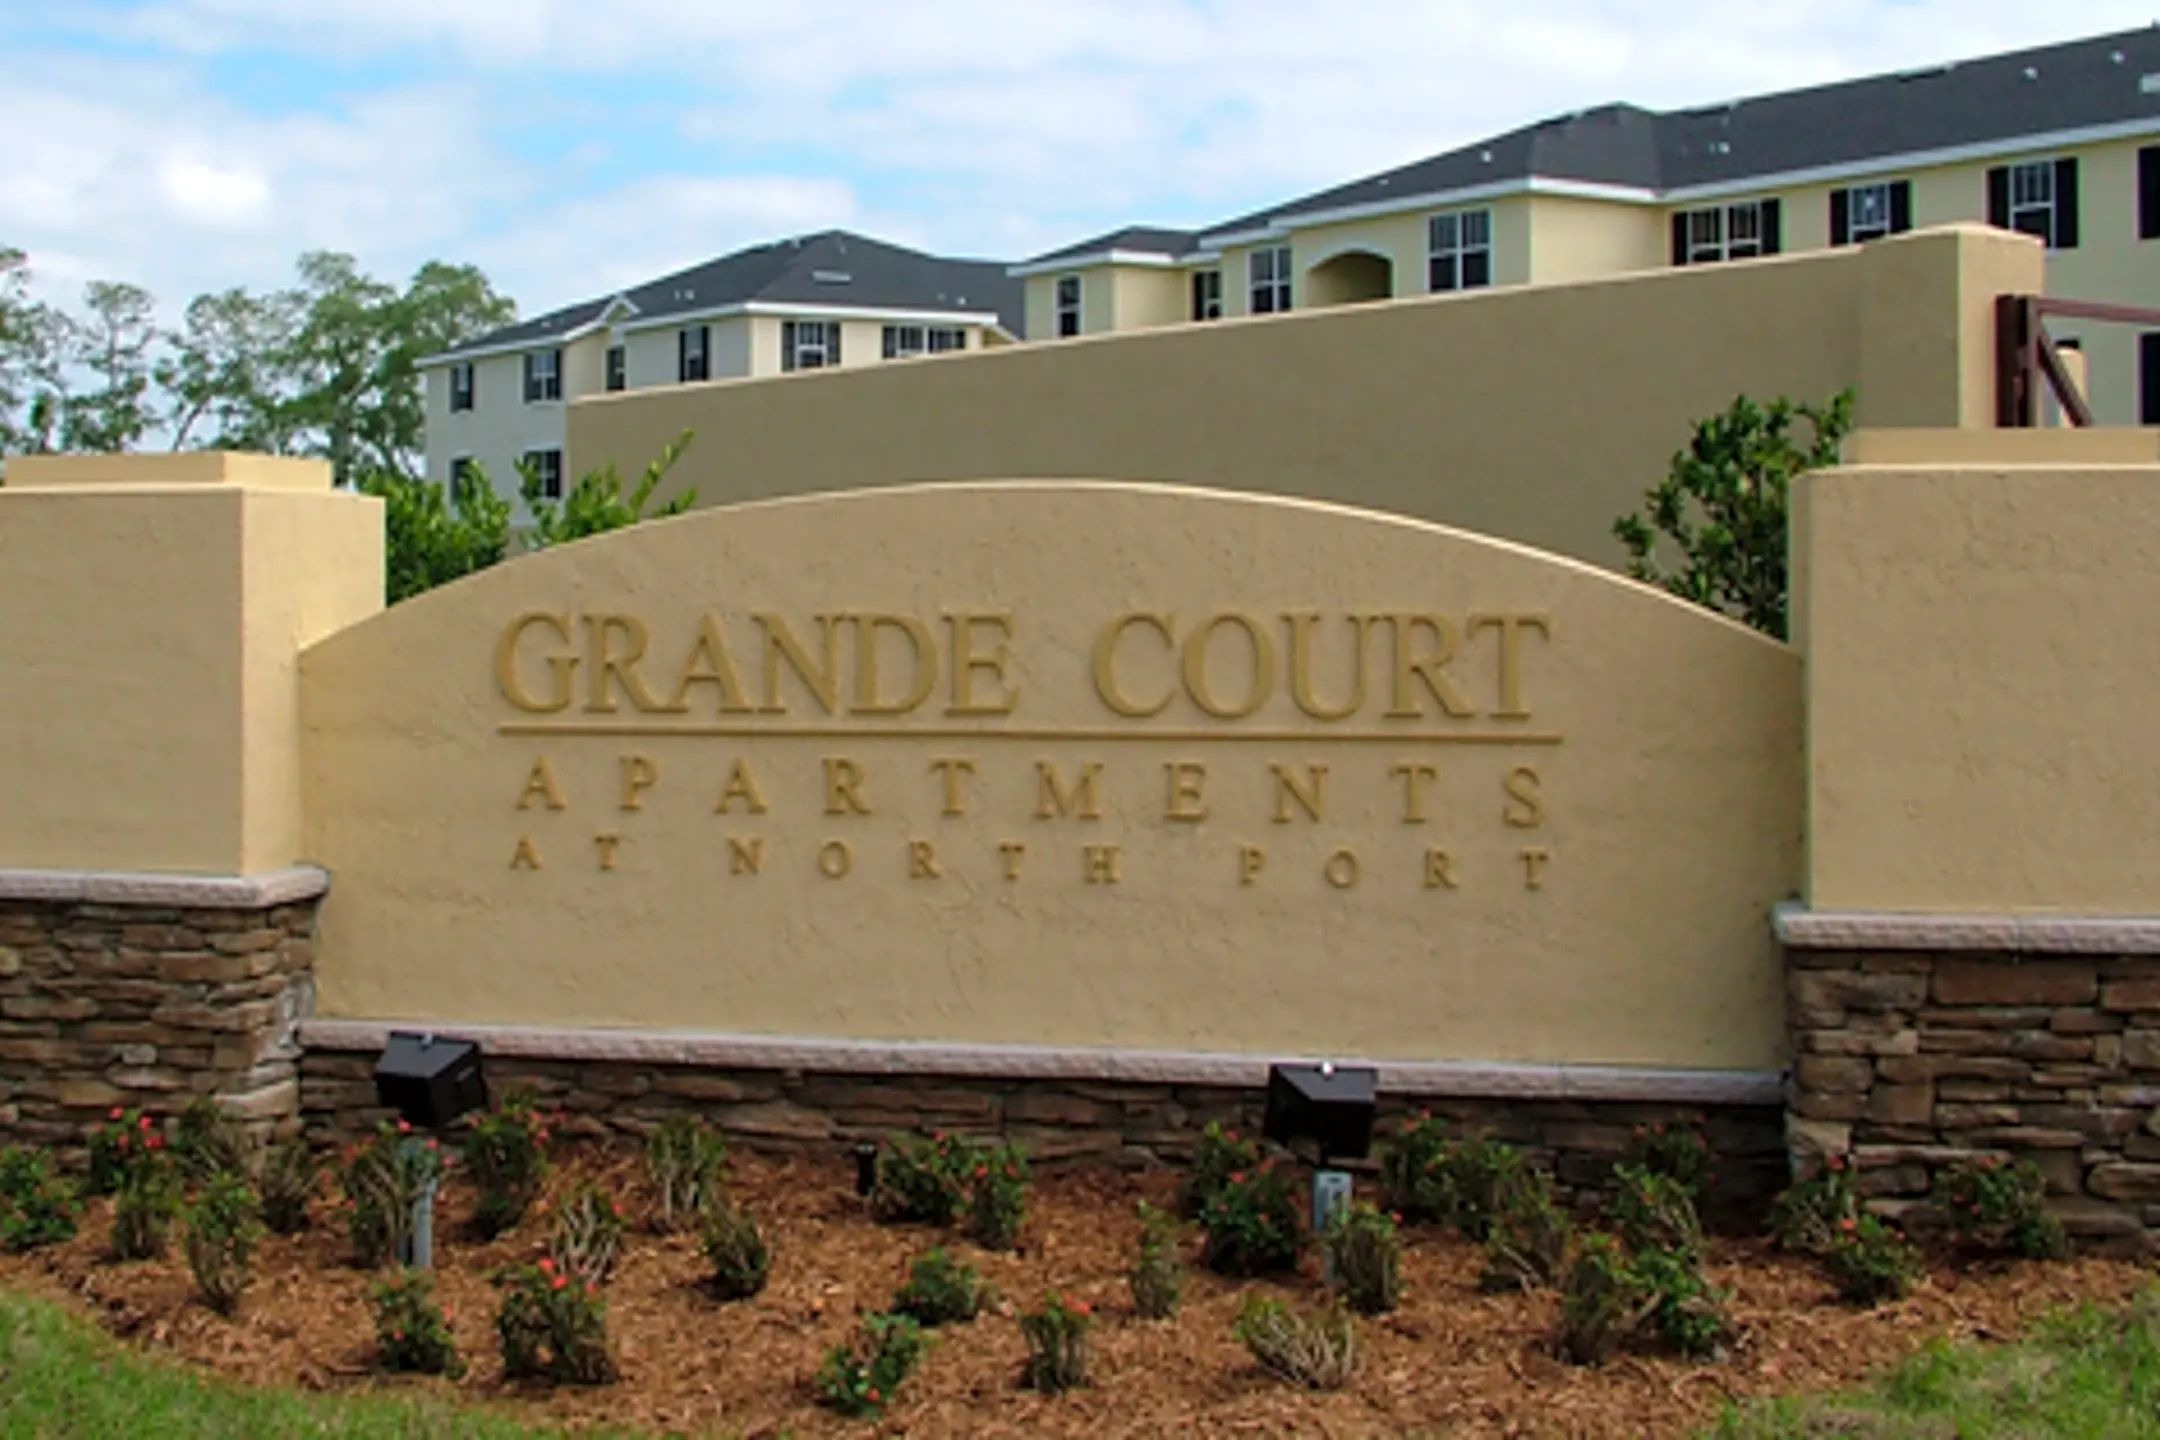 Grande Court at North Port North Port FL 34287